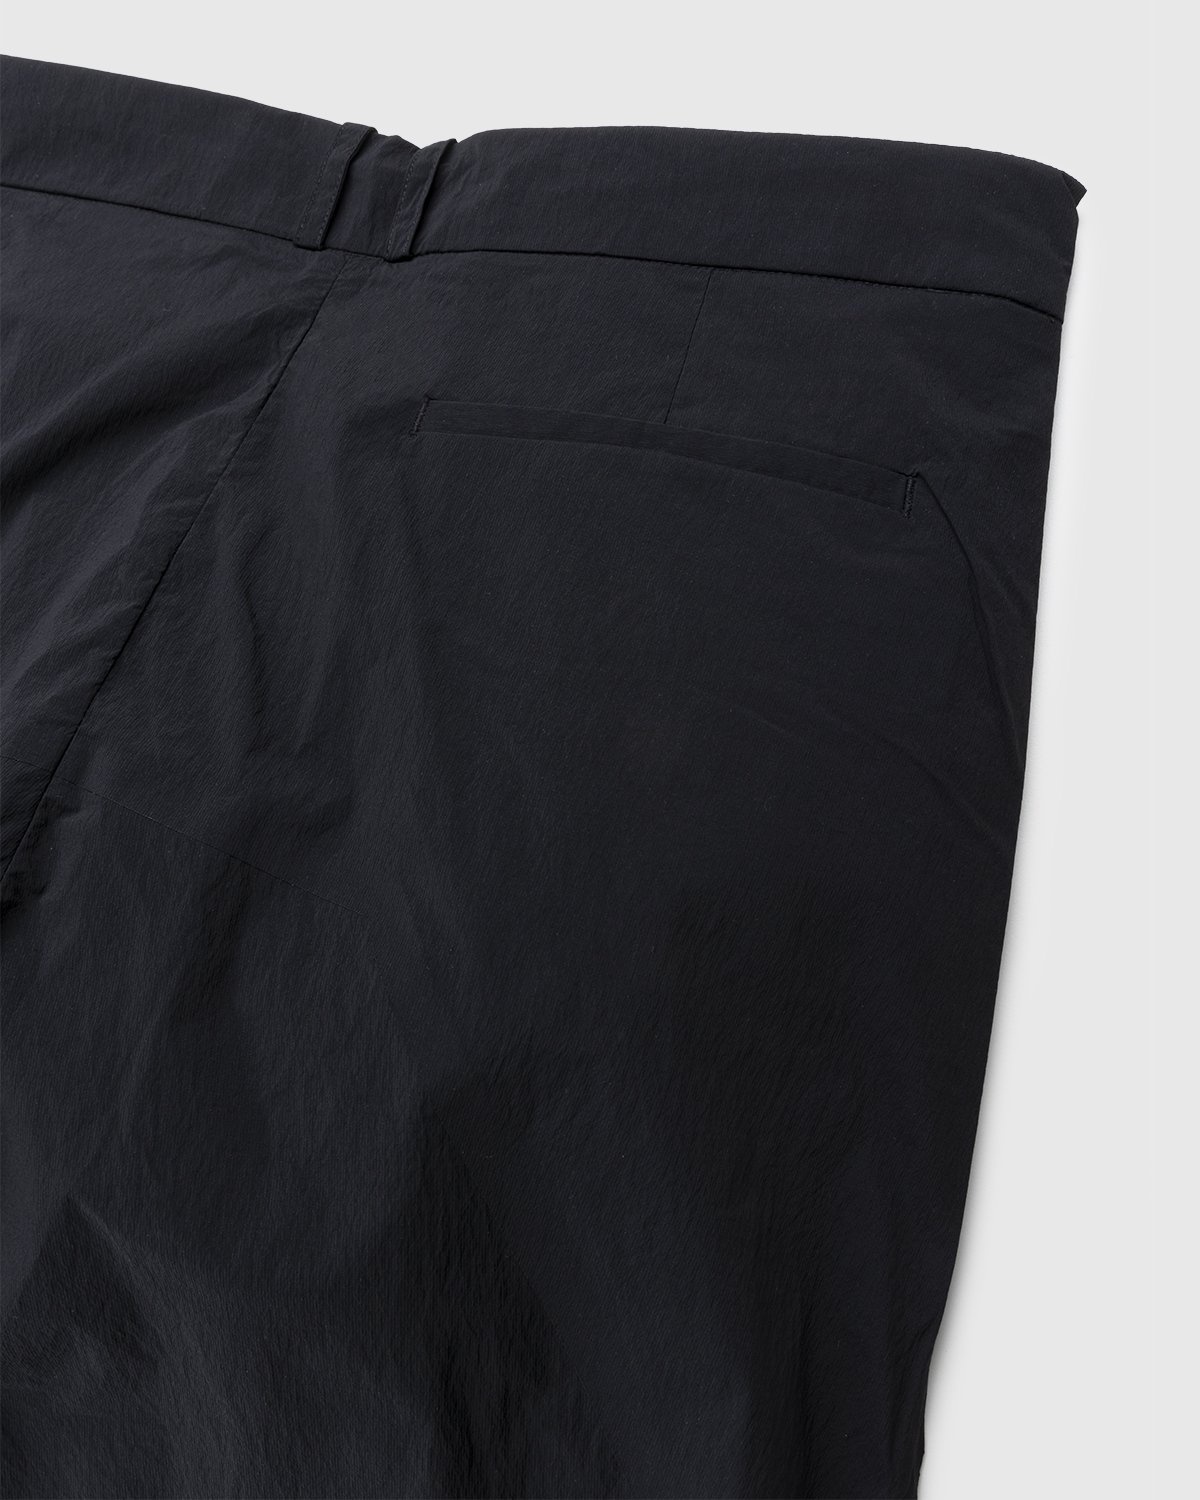 A-Cold-Wall – Stealth Nylon Pants Black | Highsnobiety Shop